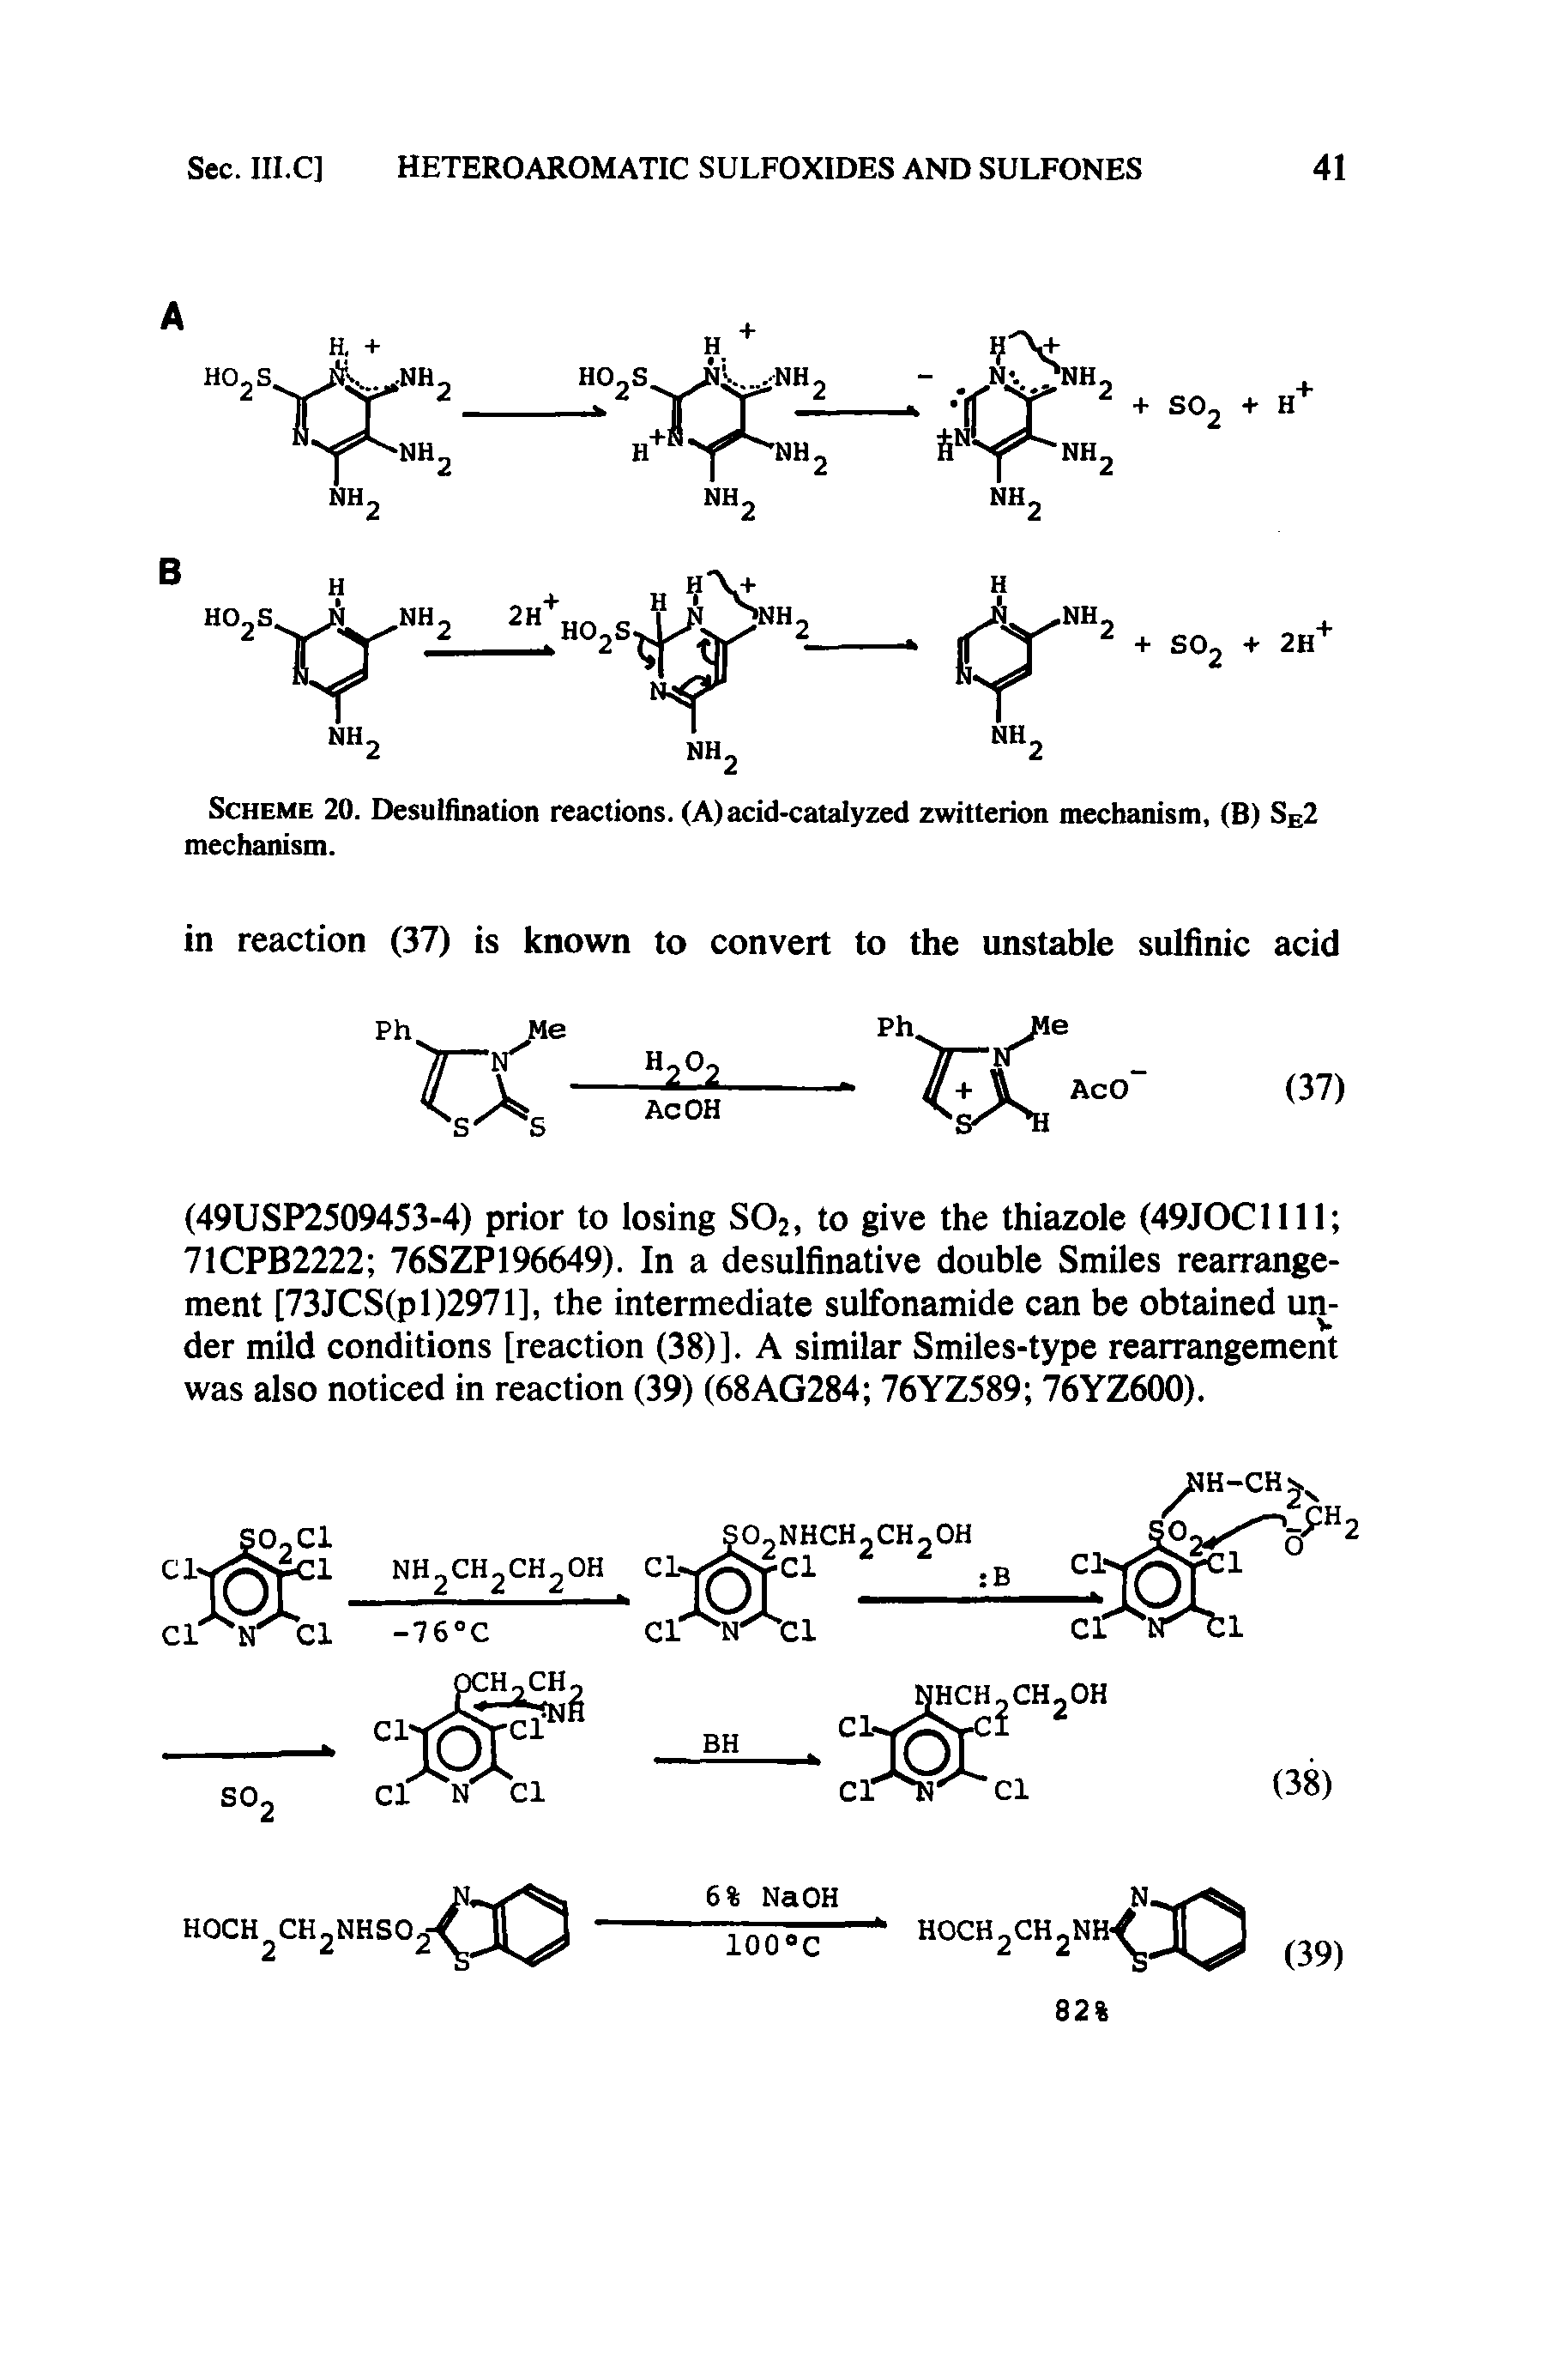 Scheme 20. Desulfination reactions. (A) acid-catalyzed zwitterion mechanism, (B) Se2 mechanism.